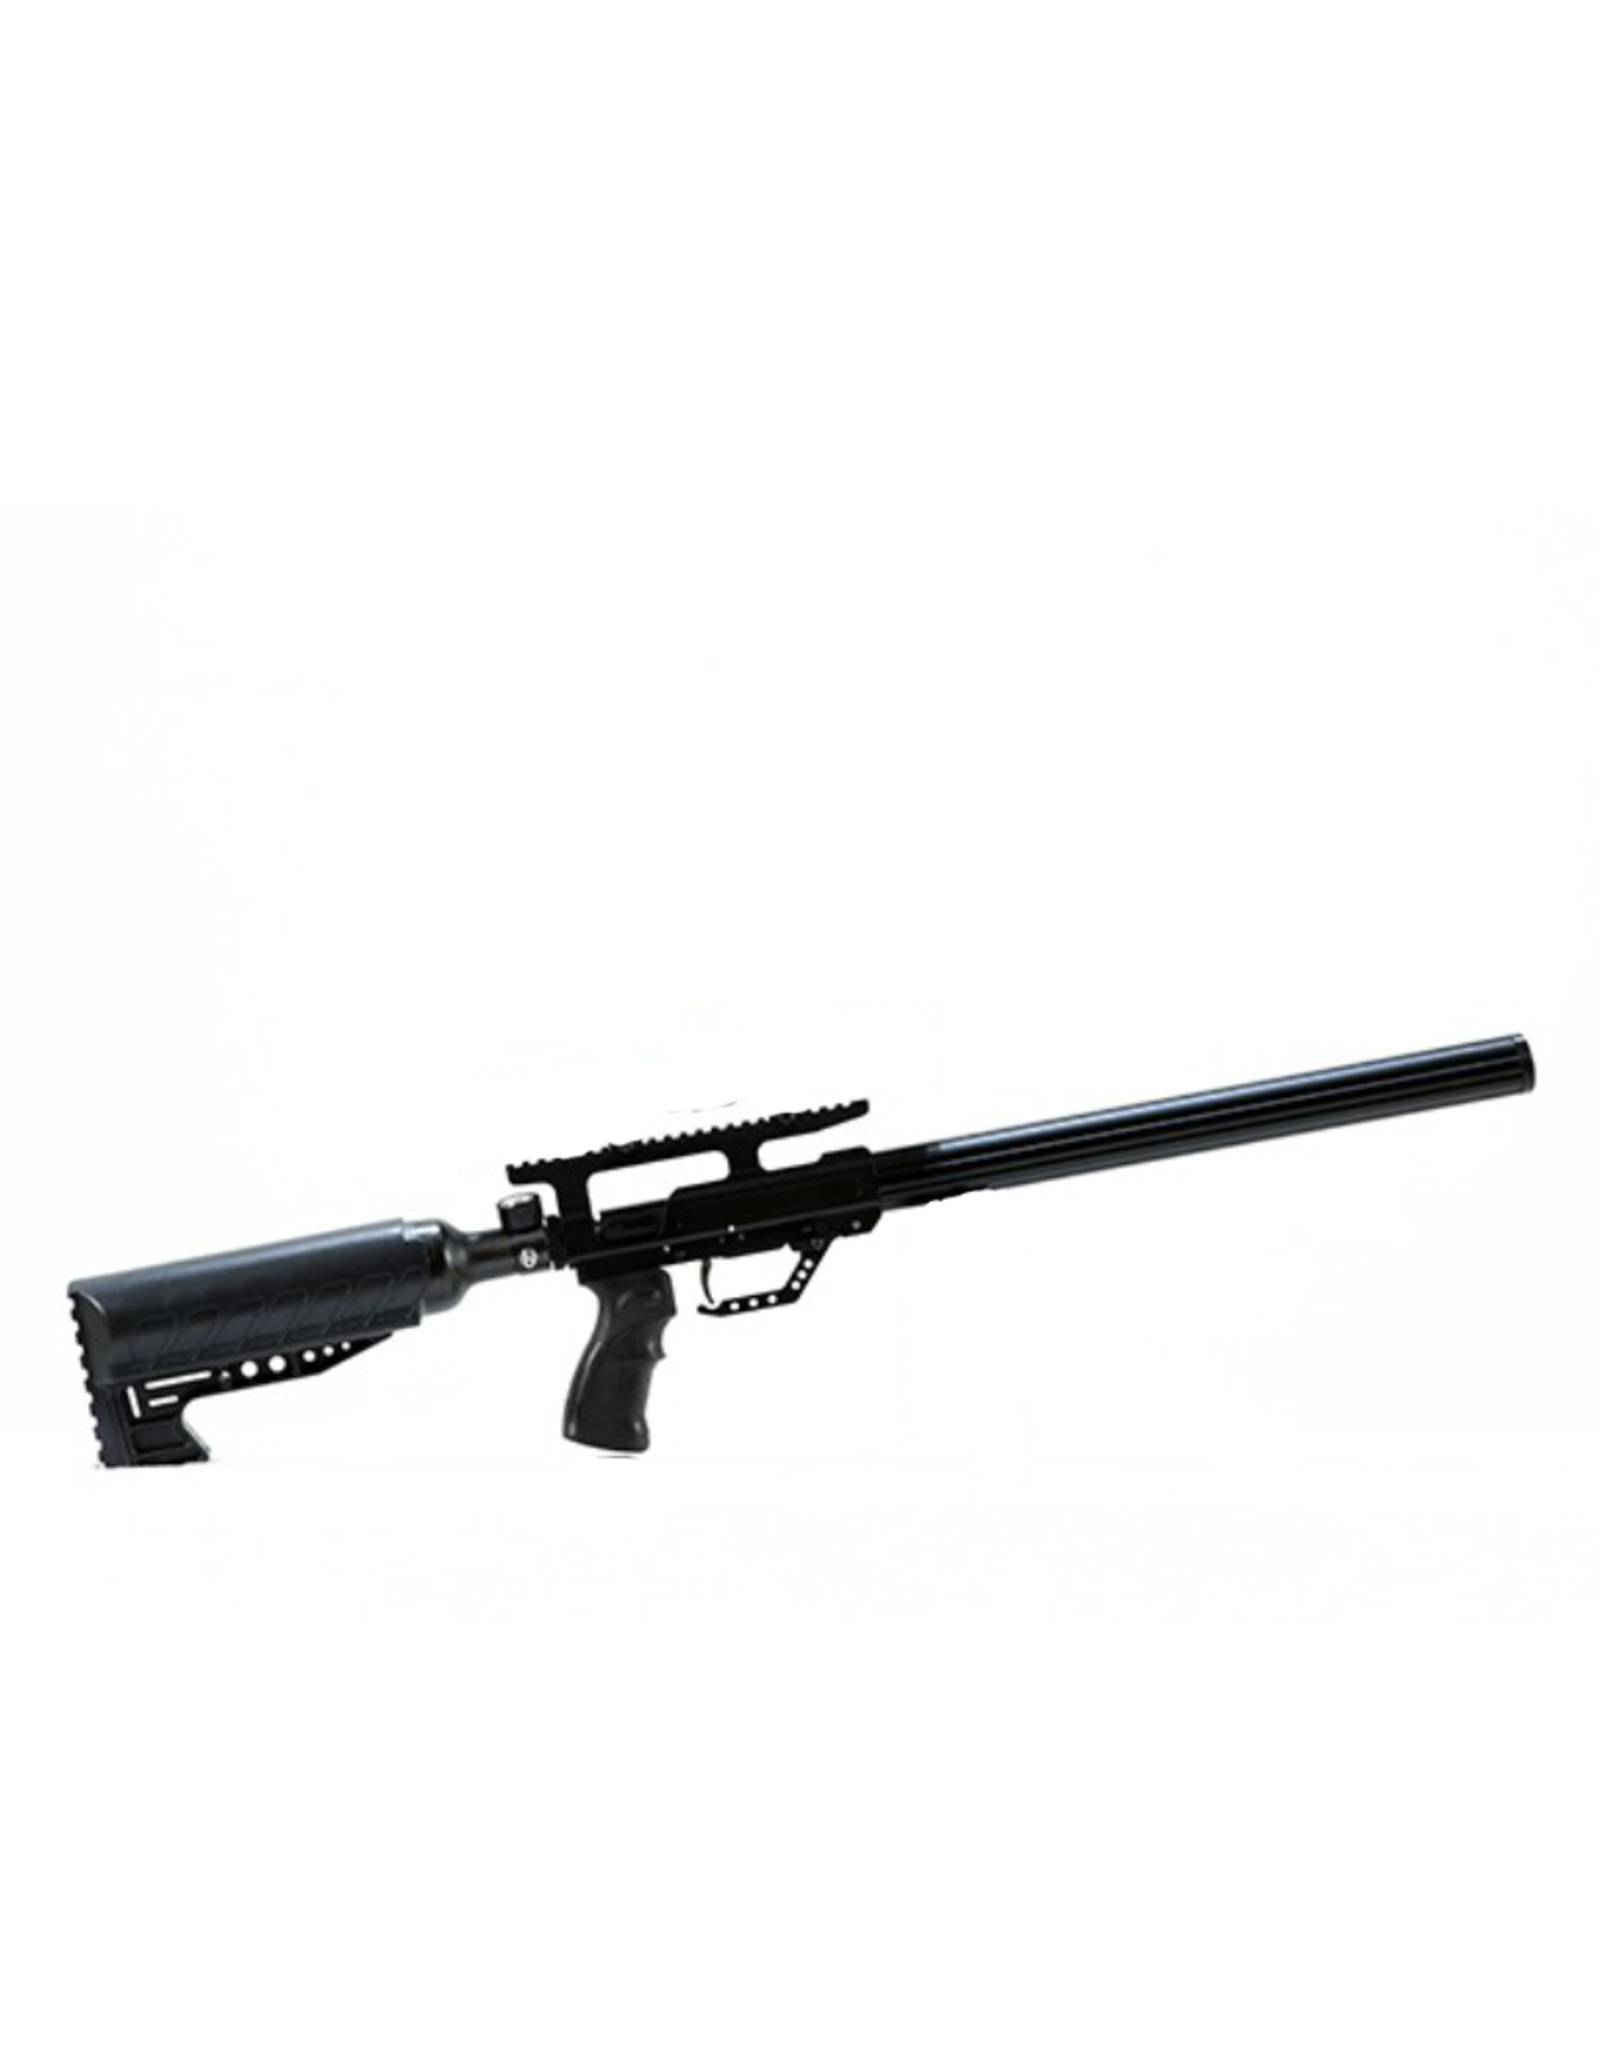 Evanix Evanix Rex-BA Sniper PCP Air Rifle with Carbon Fiber Bottle/Stock .50 Caliber (12.7mm) - Single Shot